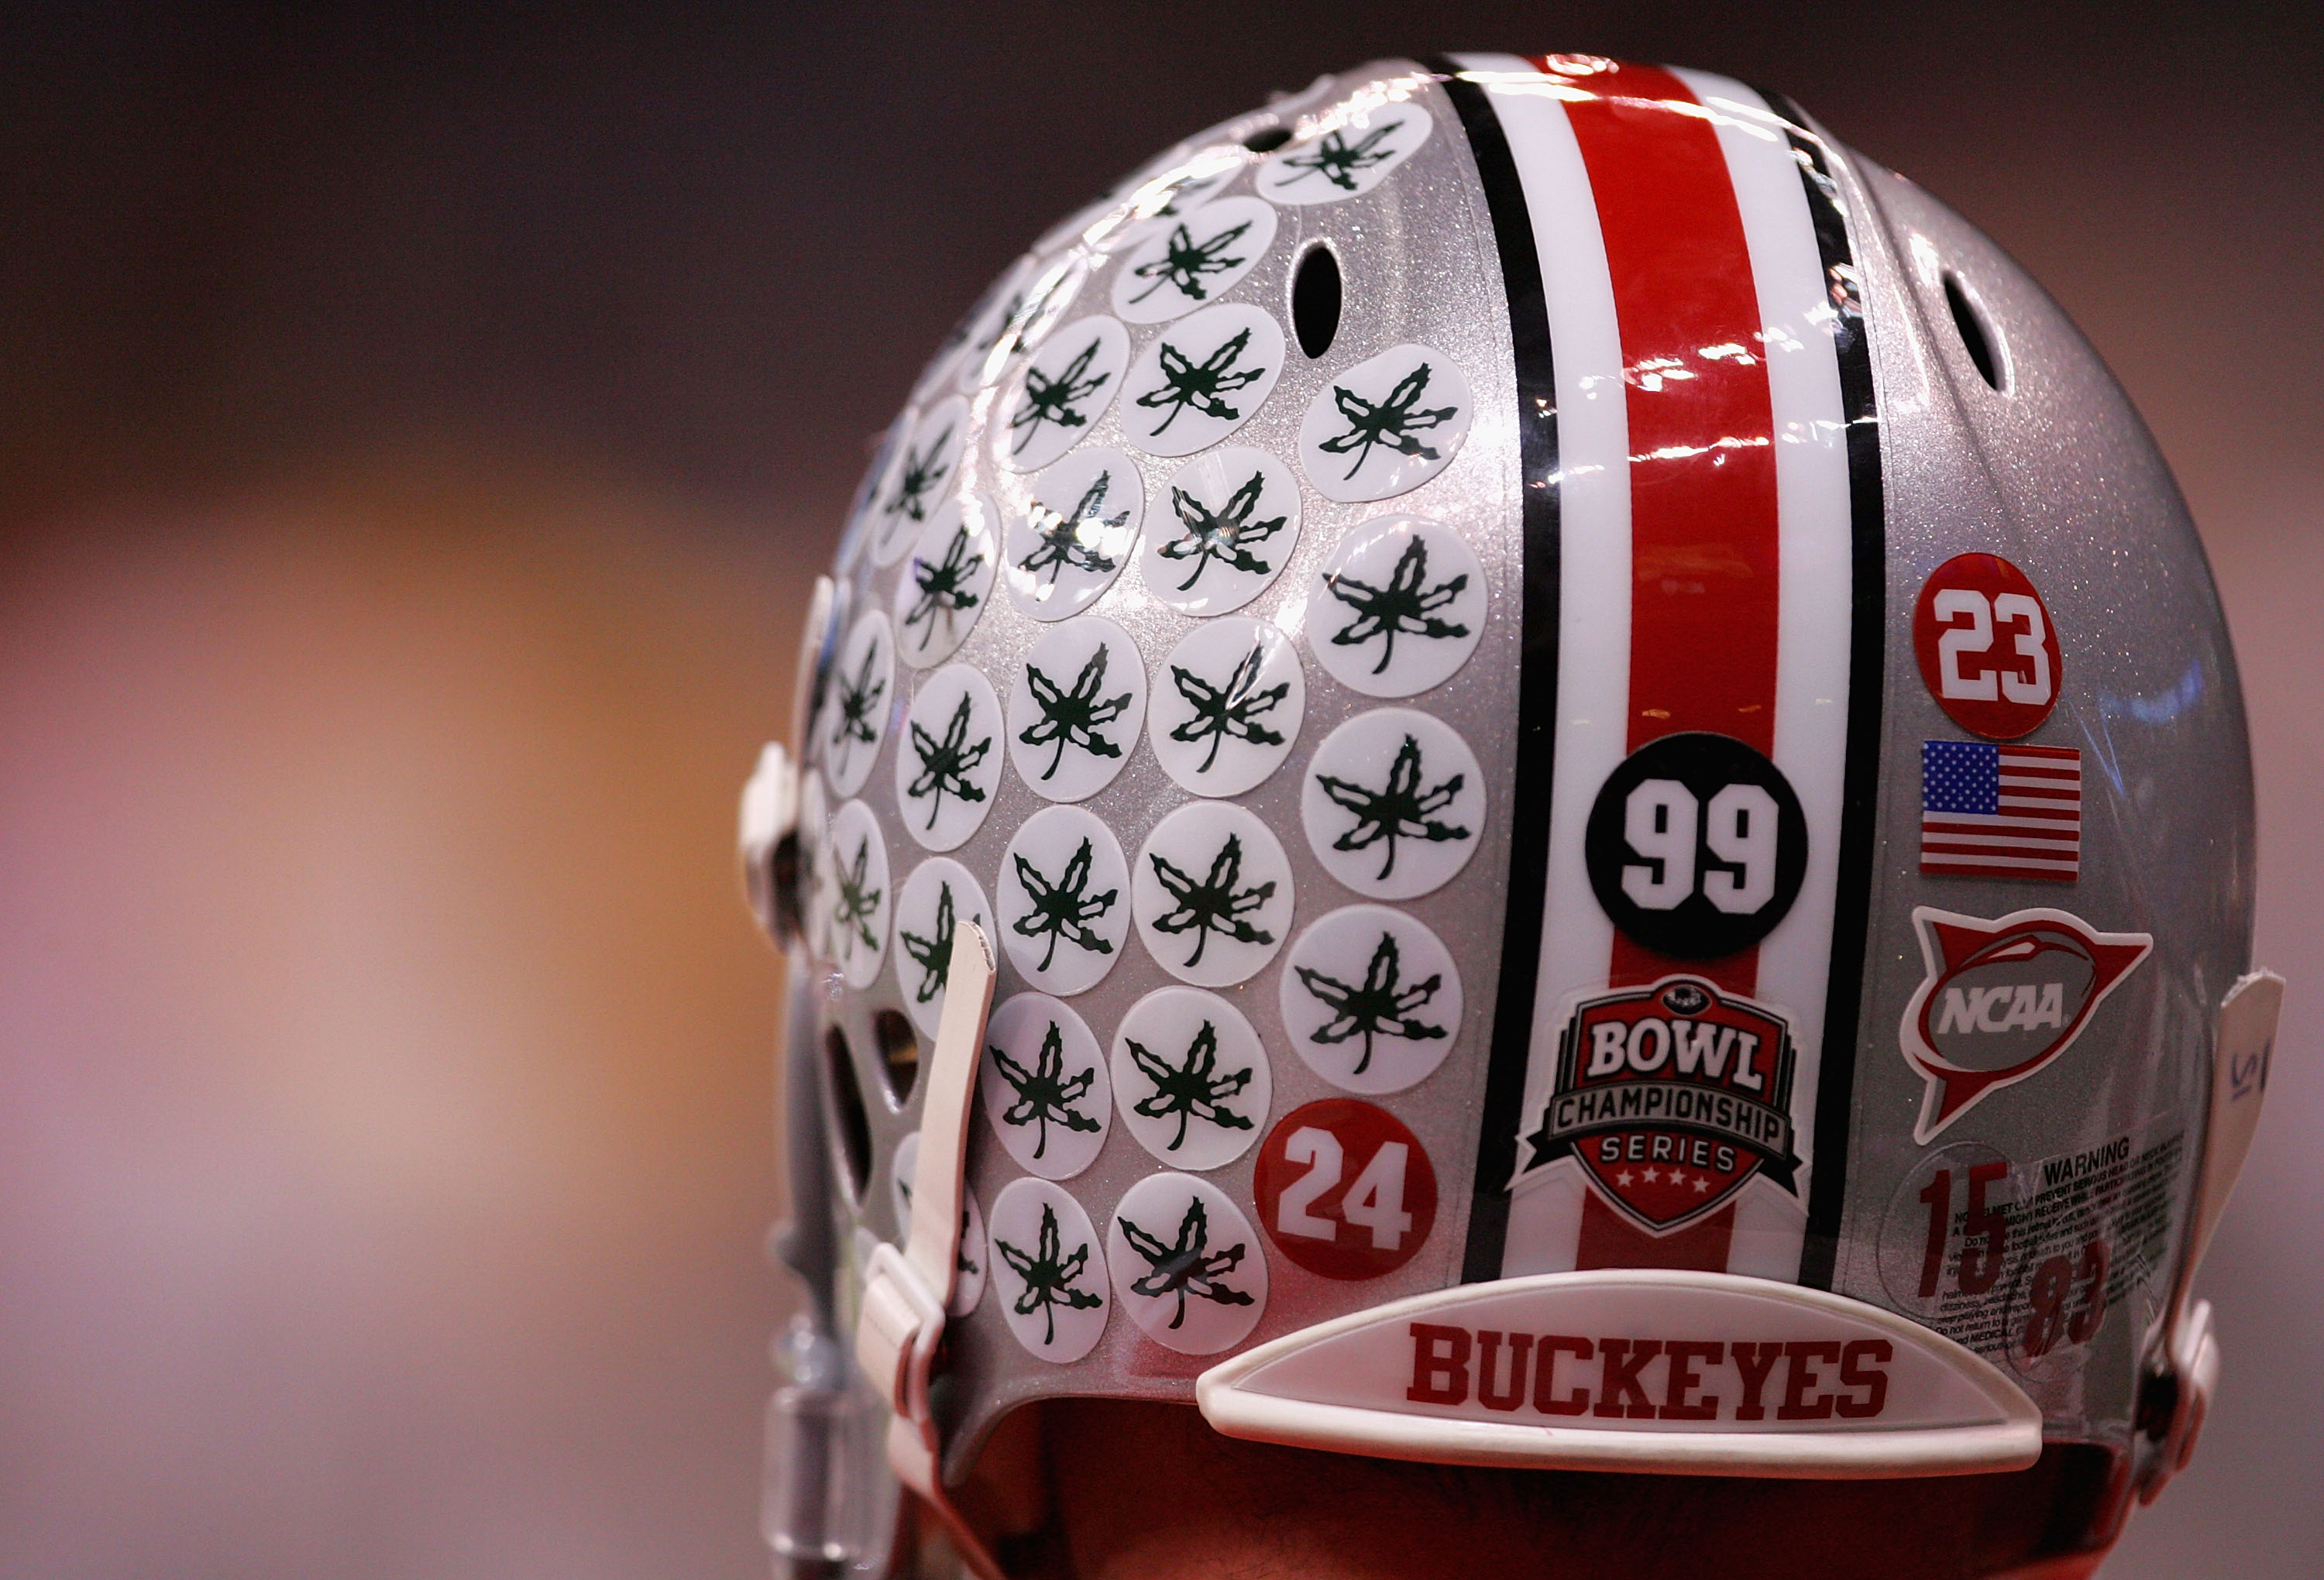 College football's best helmets, ranked